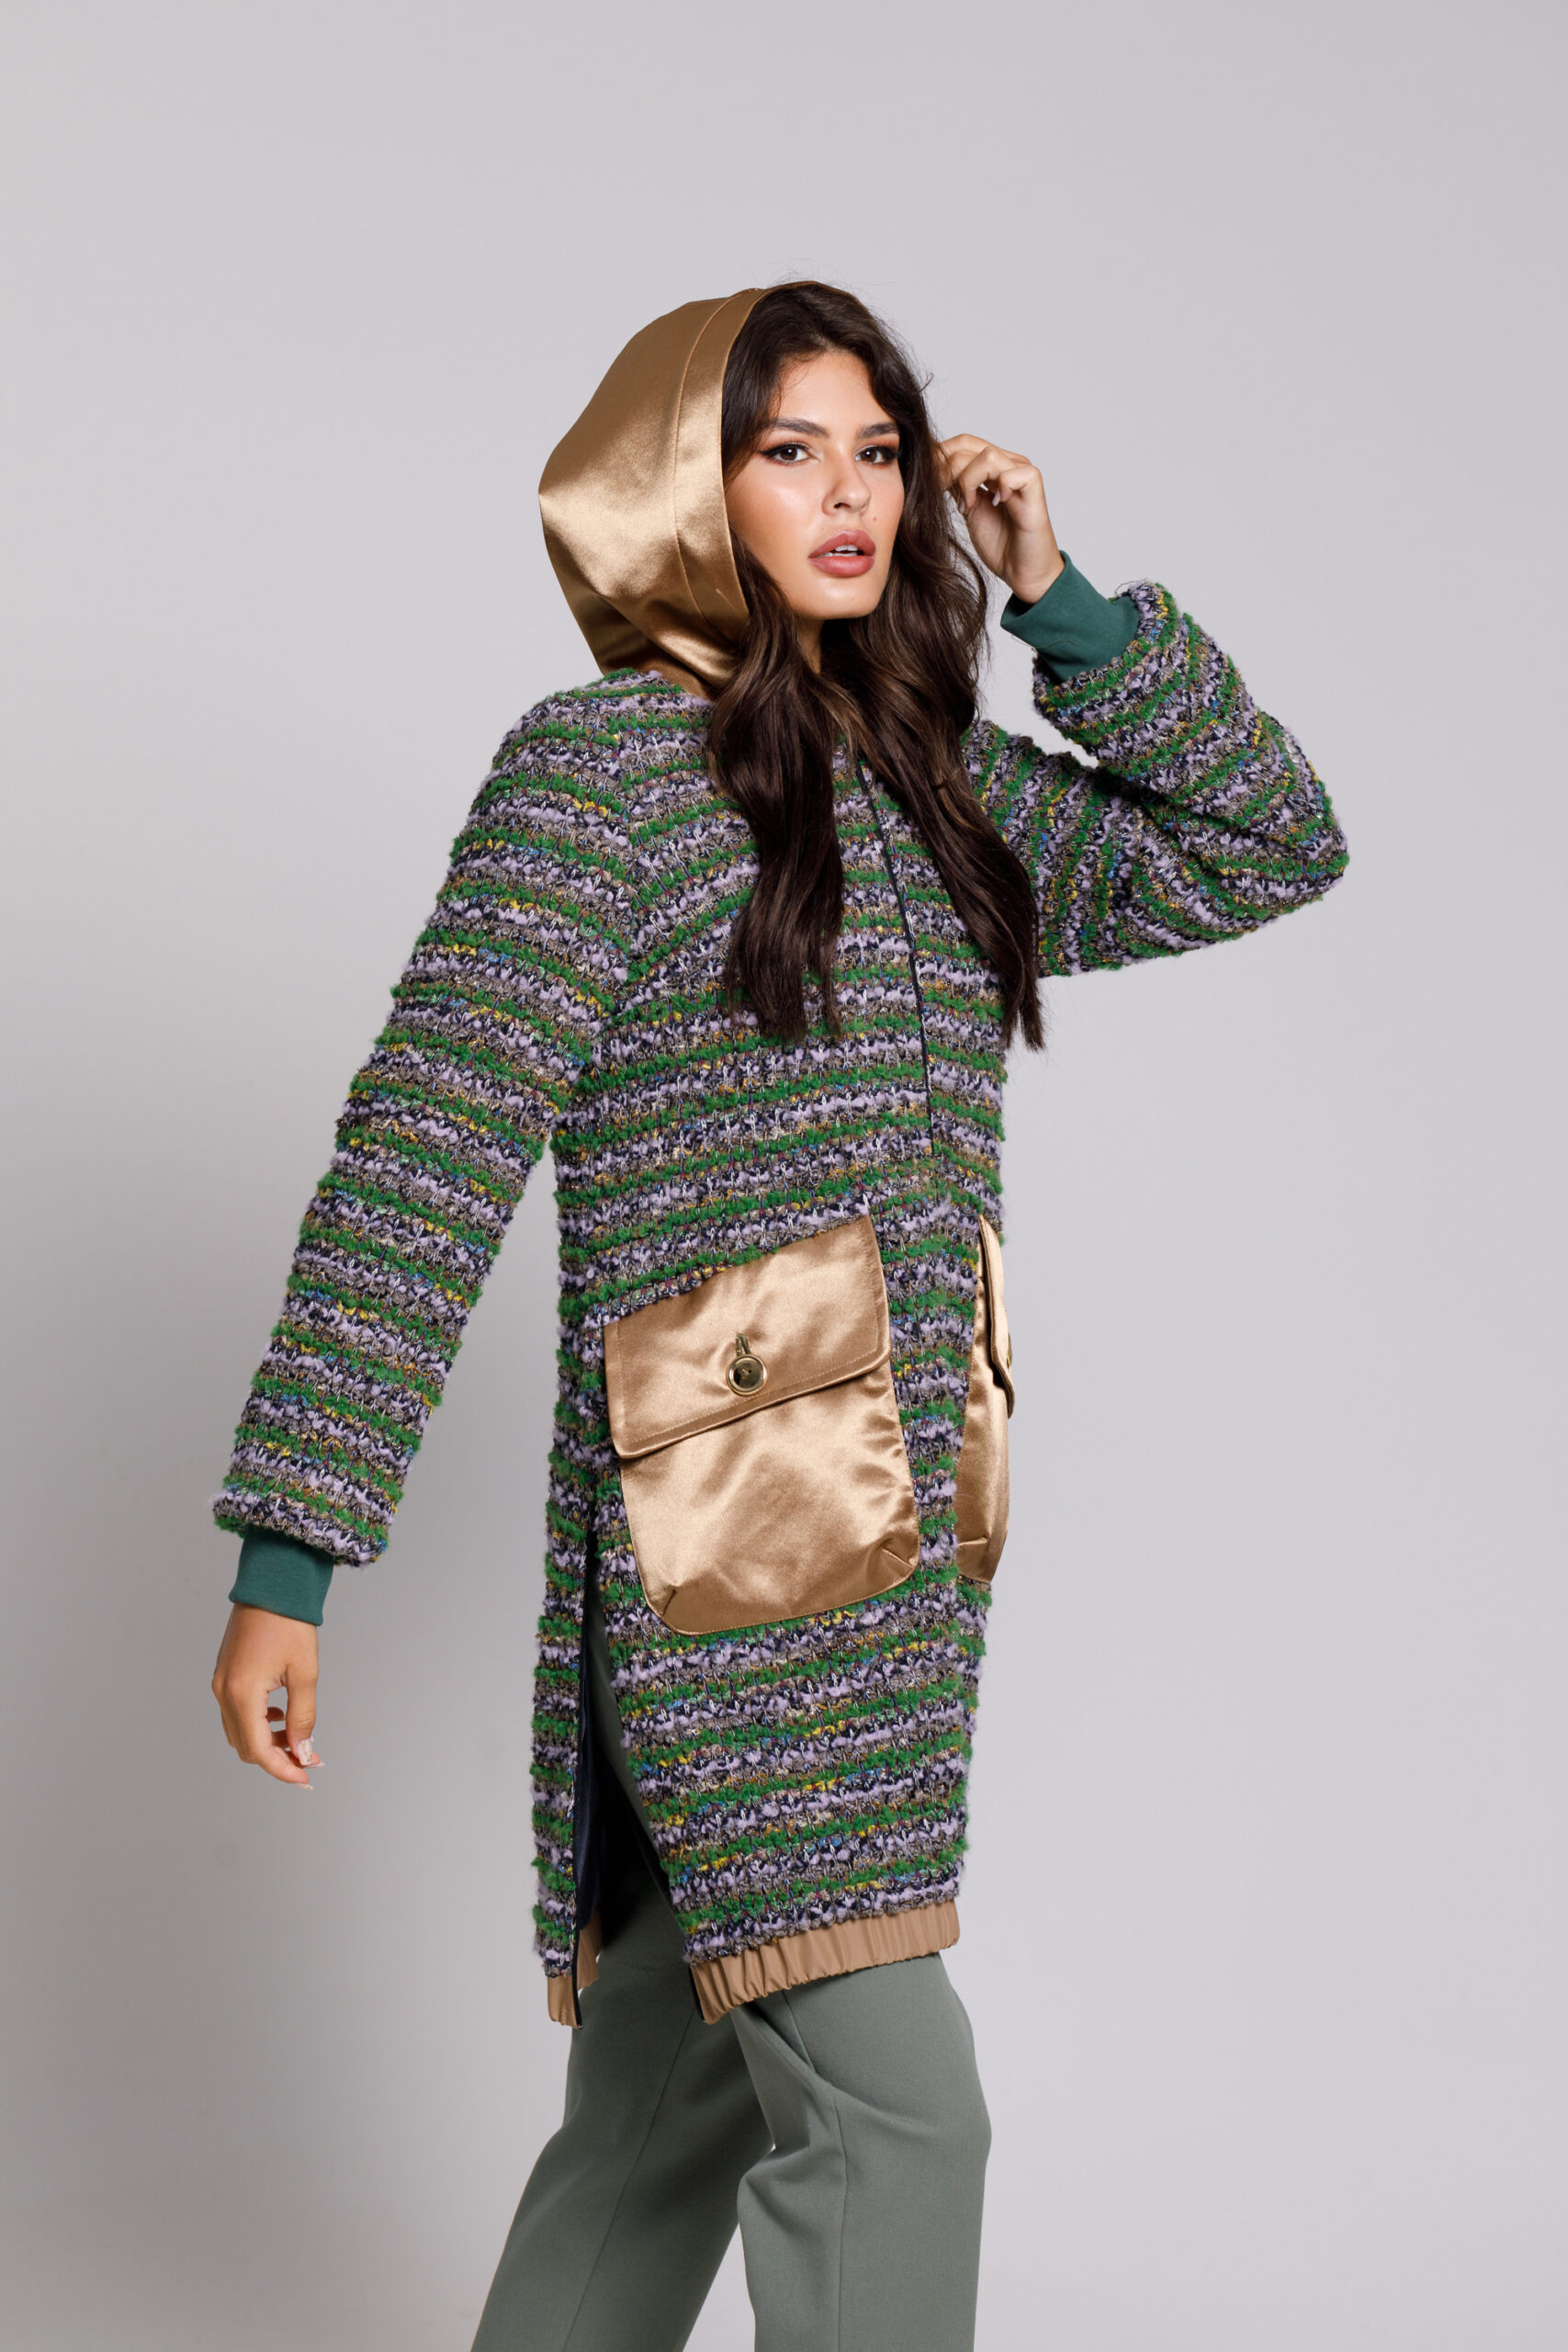 RODINA casual overcoat in multicolored knit. Natural fabrics, original design, handmade embroidery